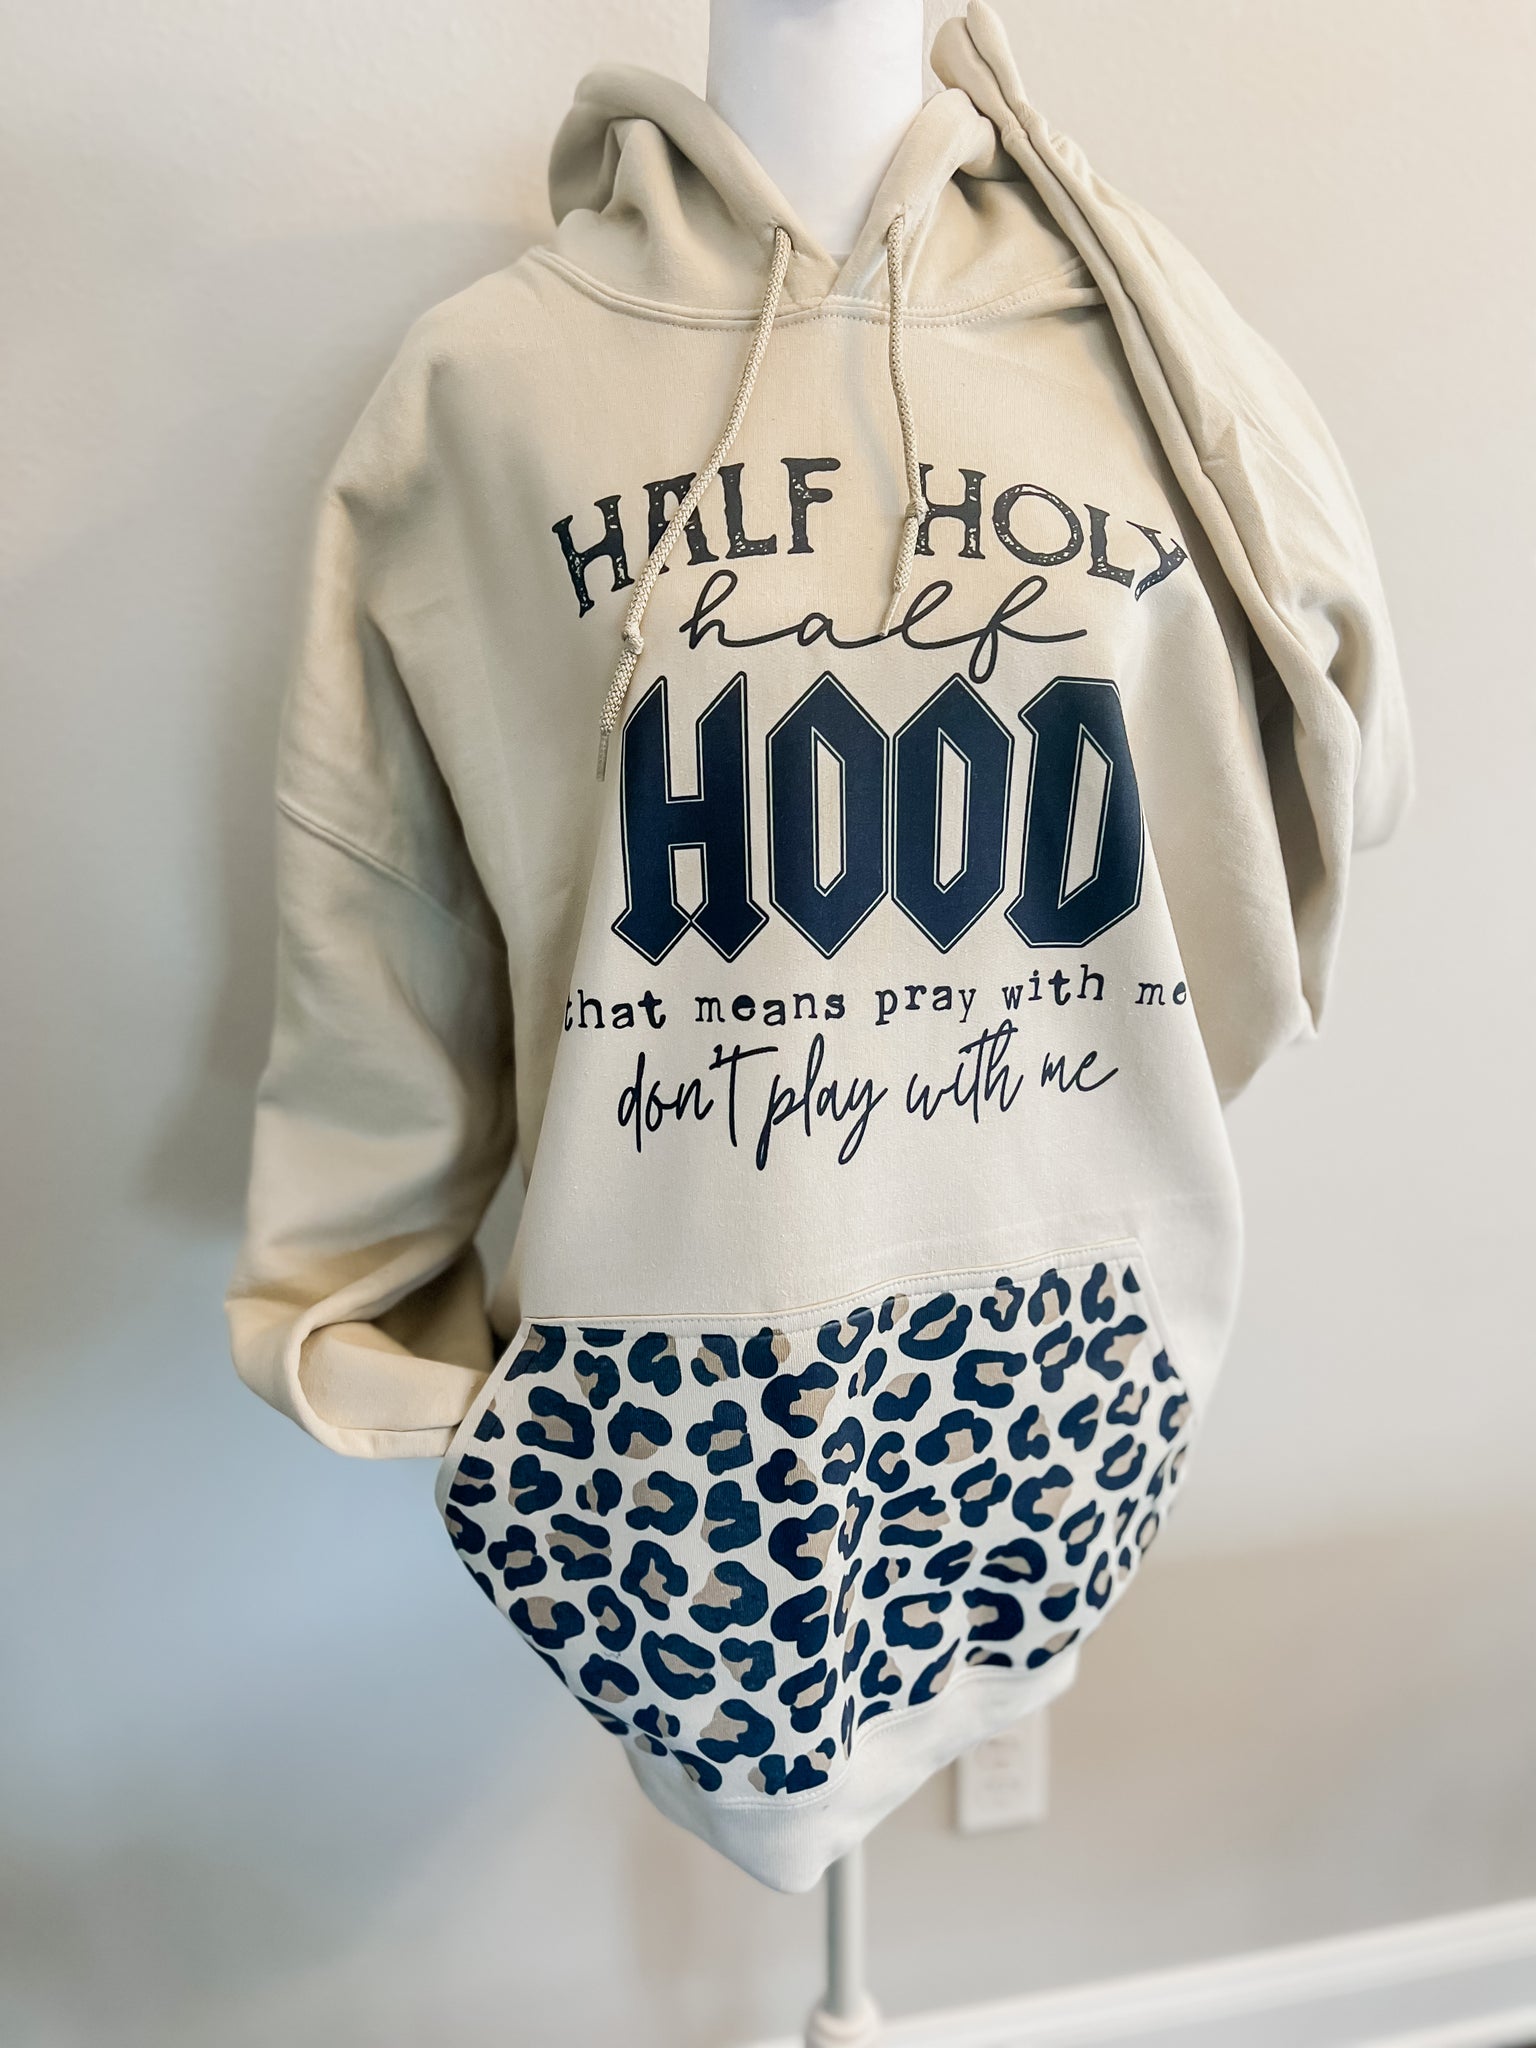 Half Holy half hood